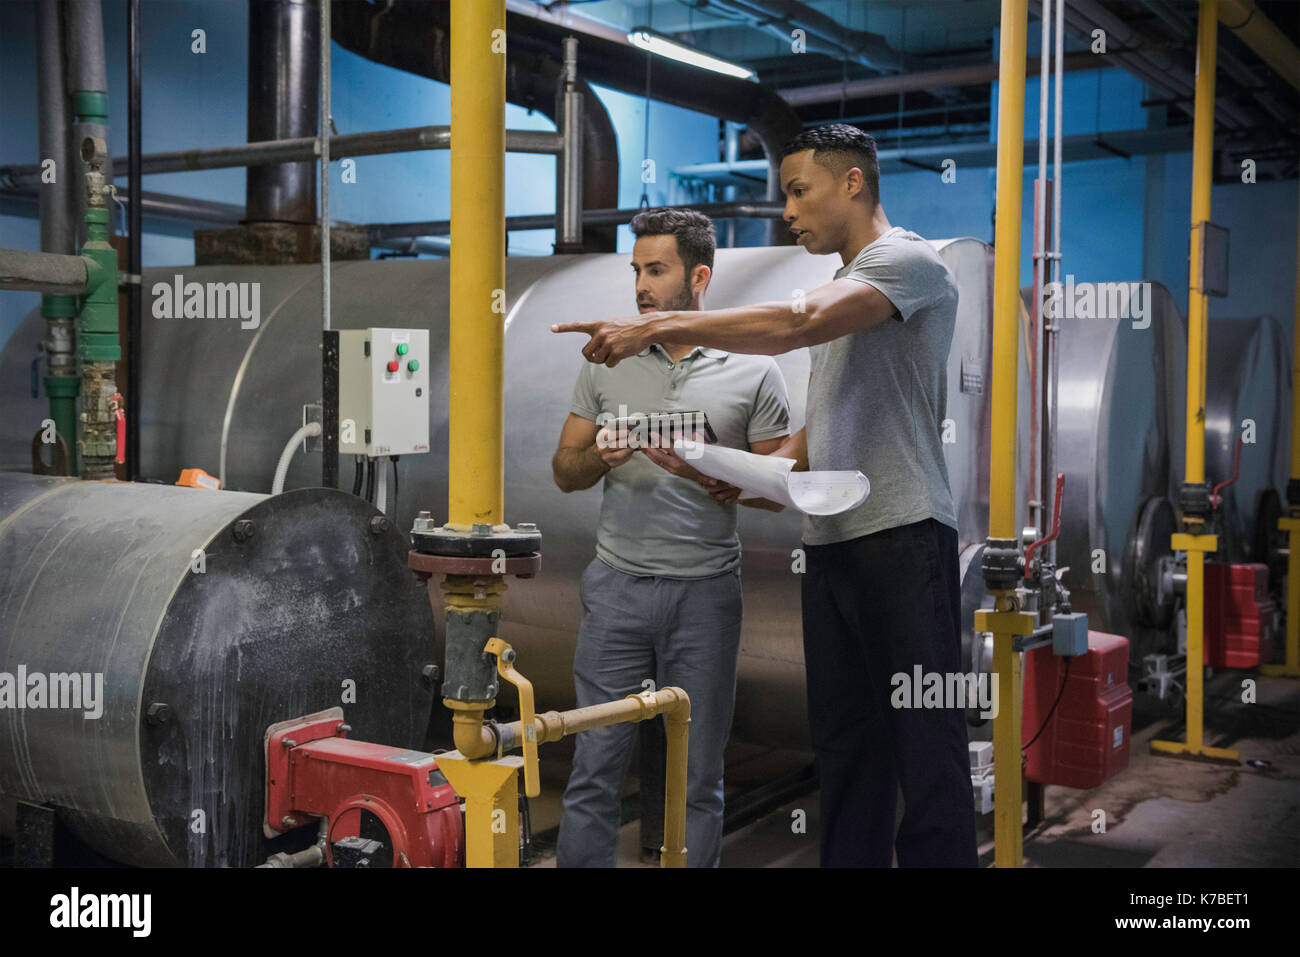 Men working in industrial setting Stock Photo